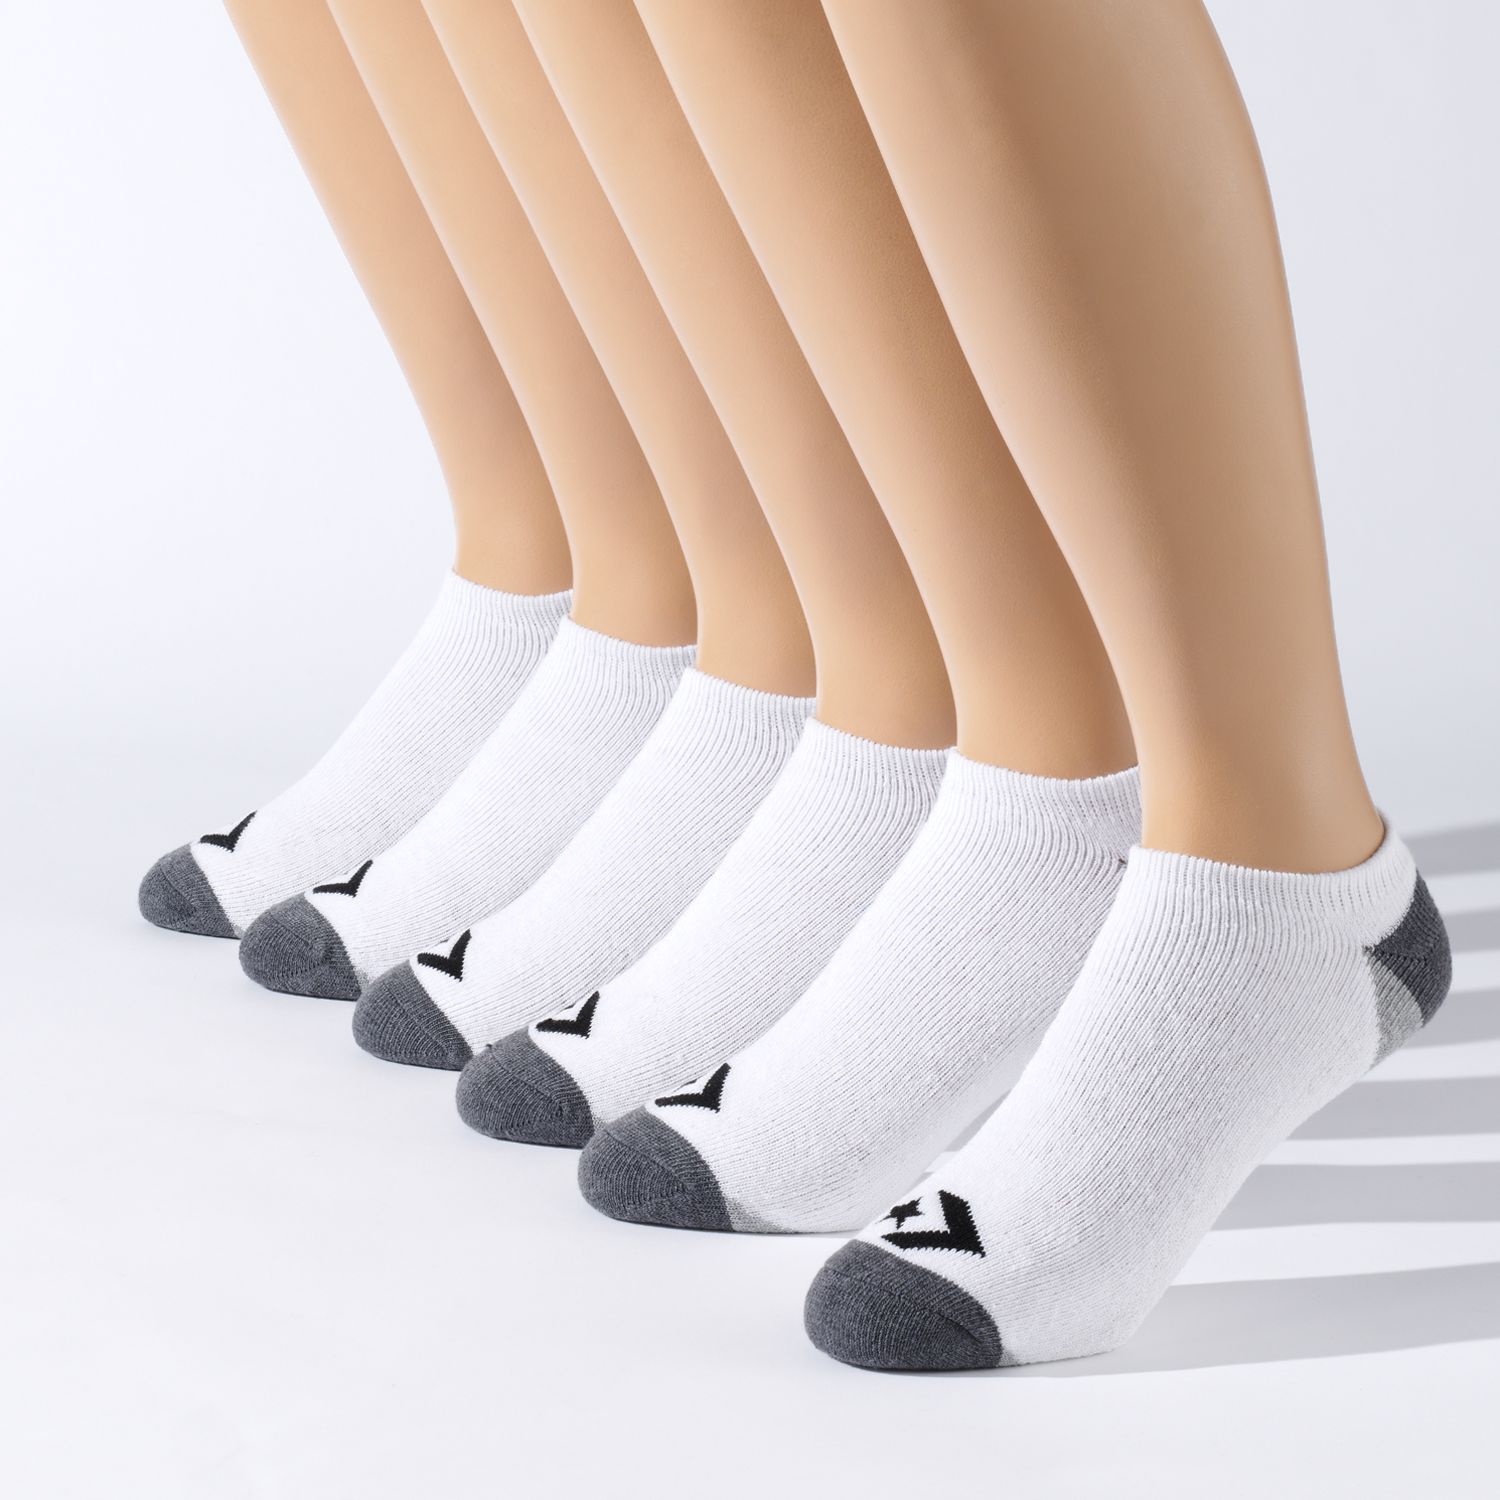 converse ankle socks mens